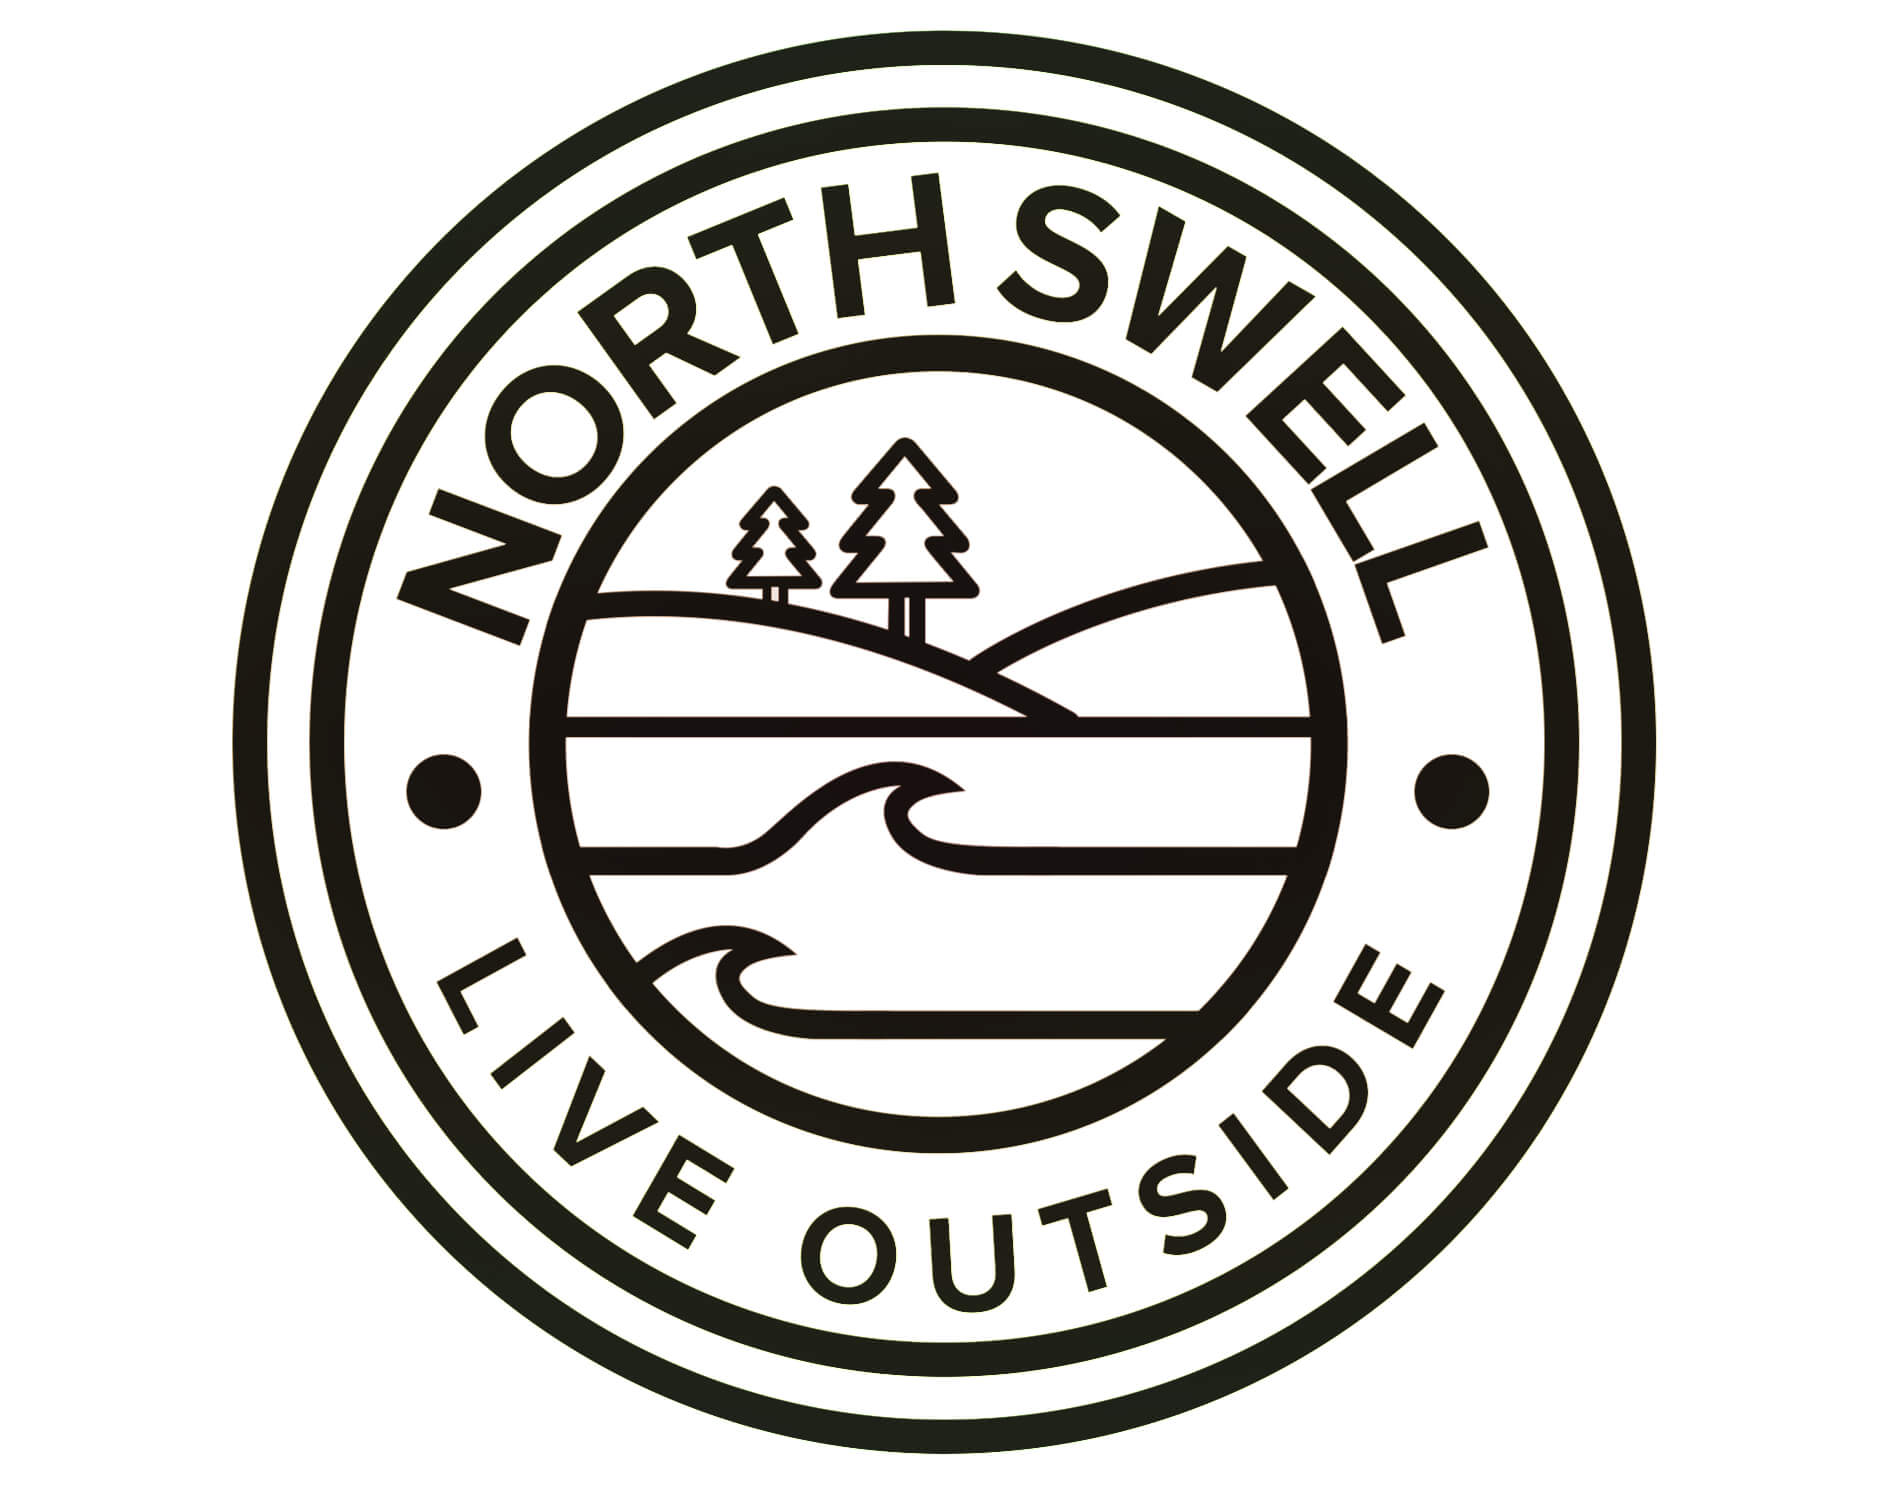 North Swell - circle